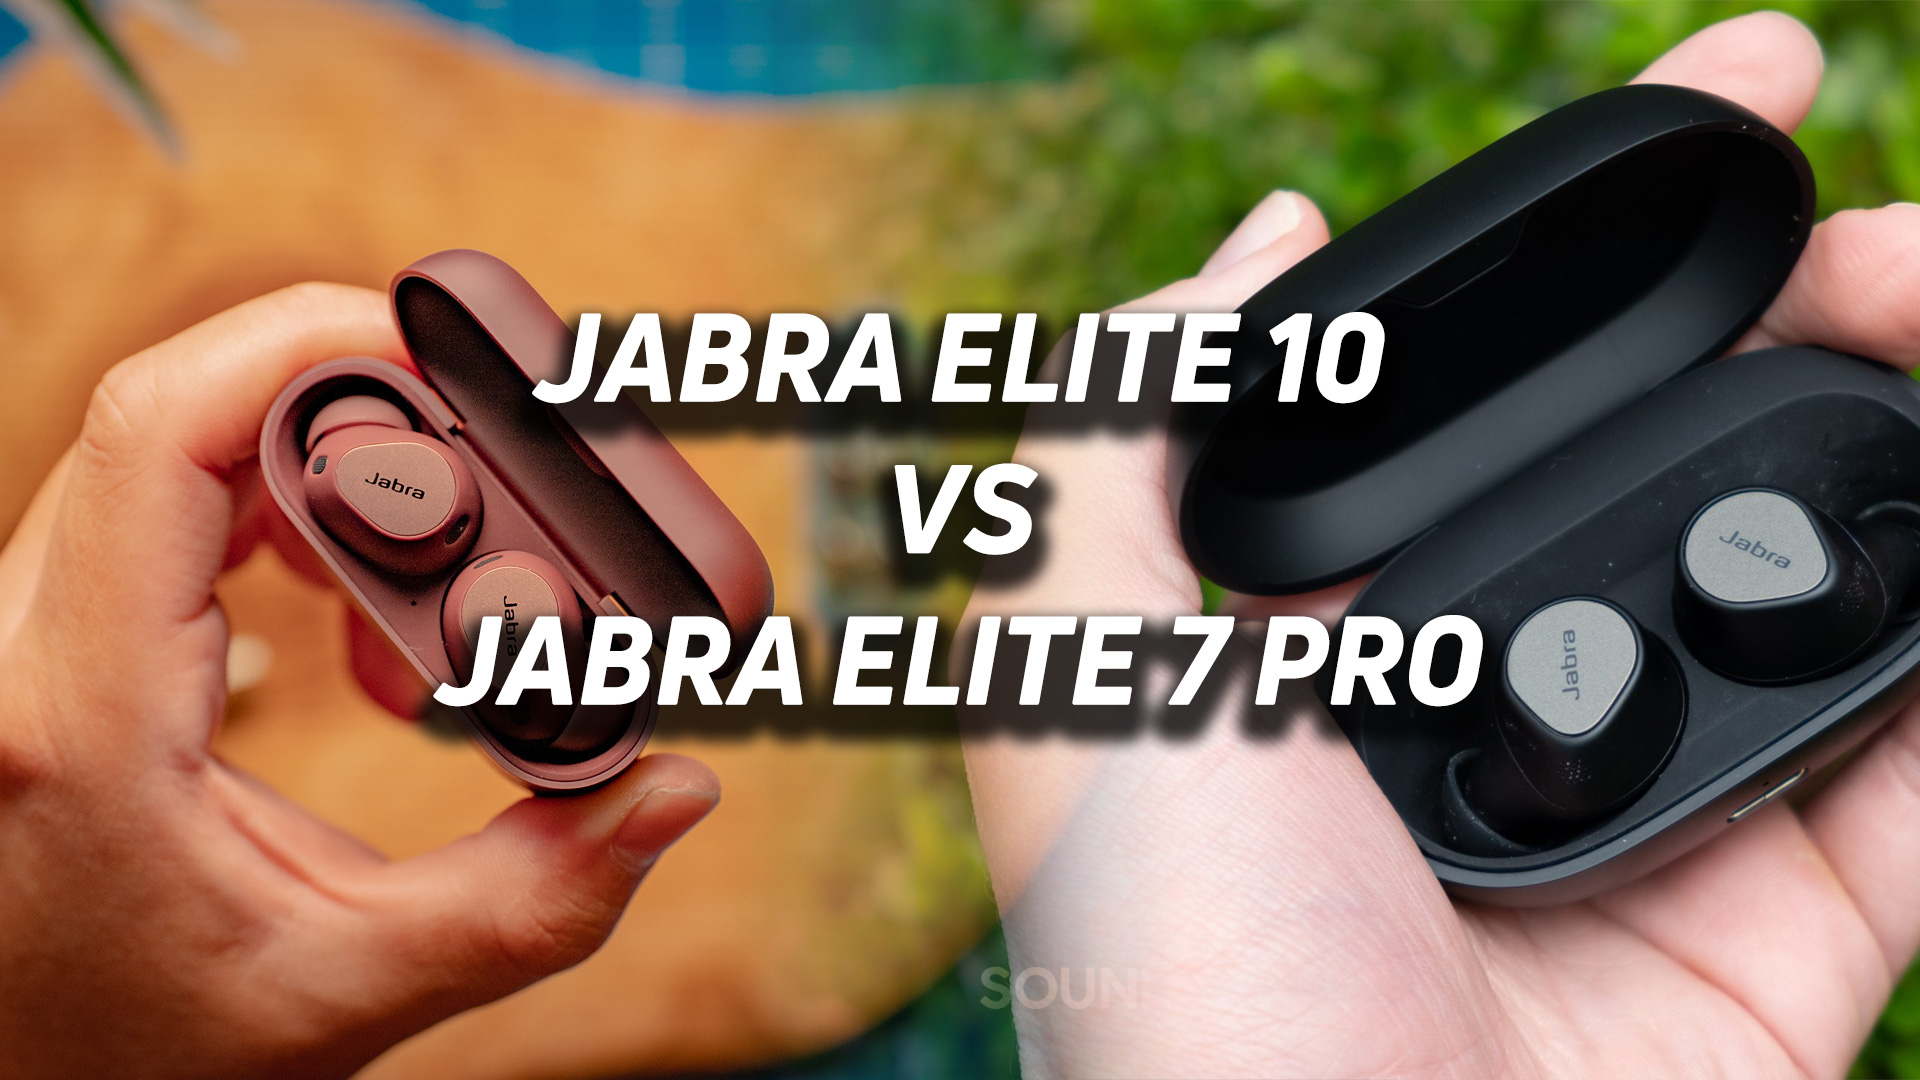 Jabra Elite 5 vs Jabra Elite 7 Pro: What's the difference?